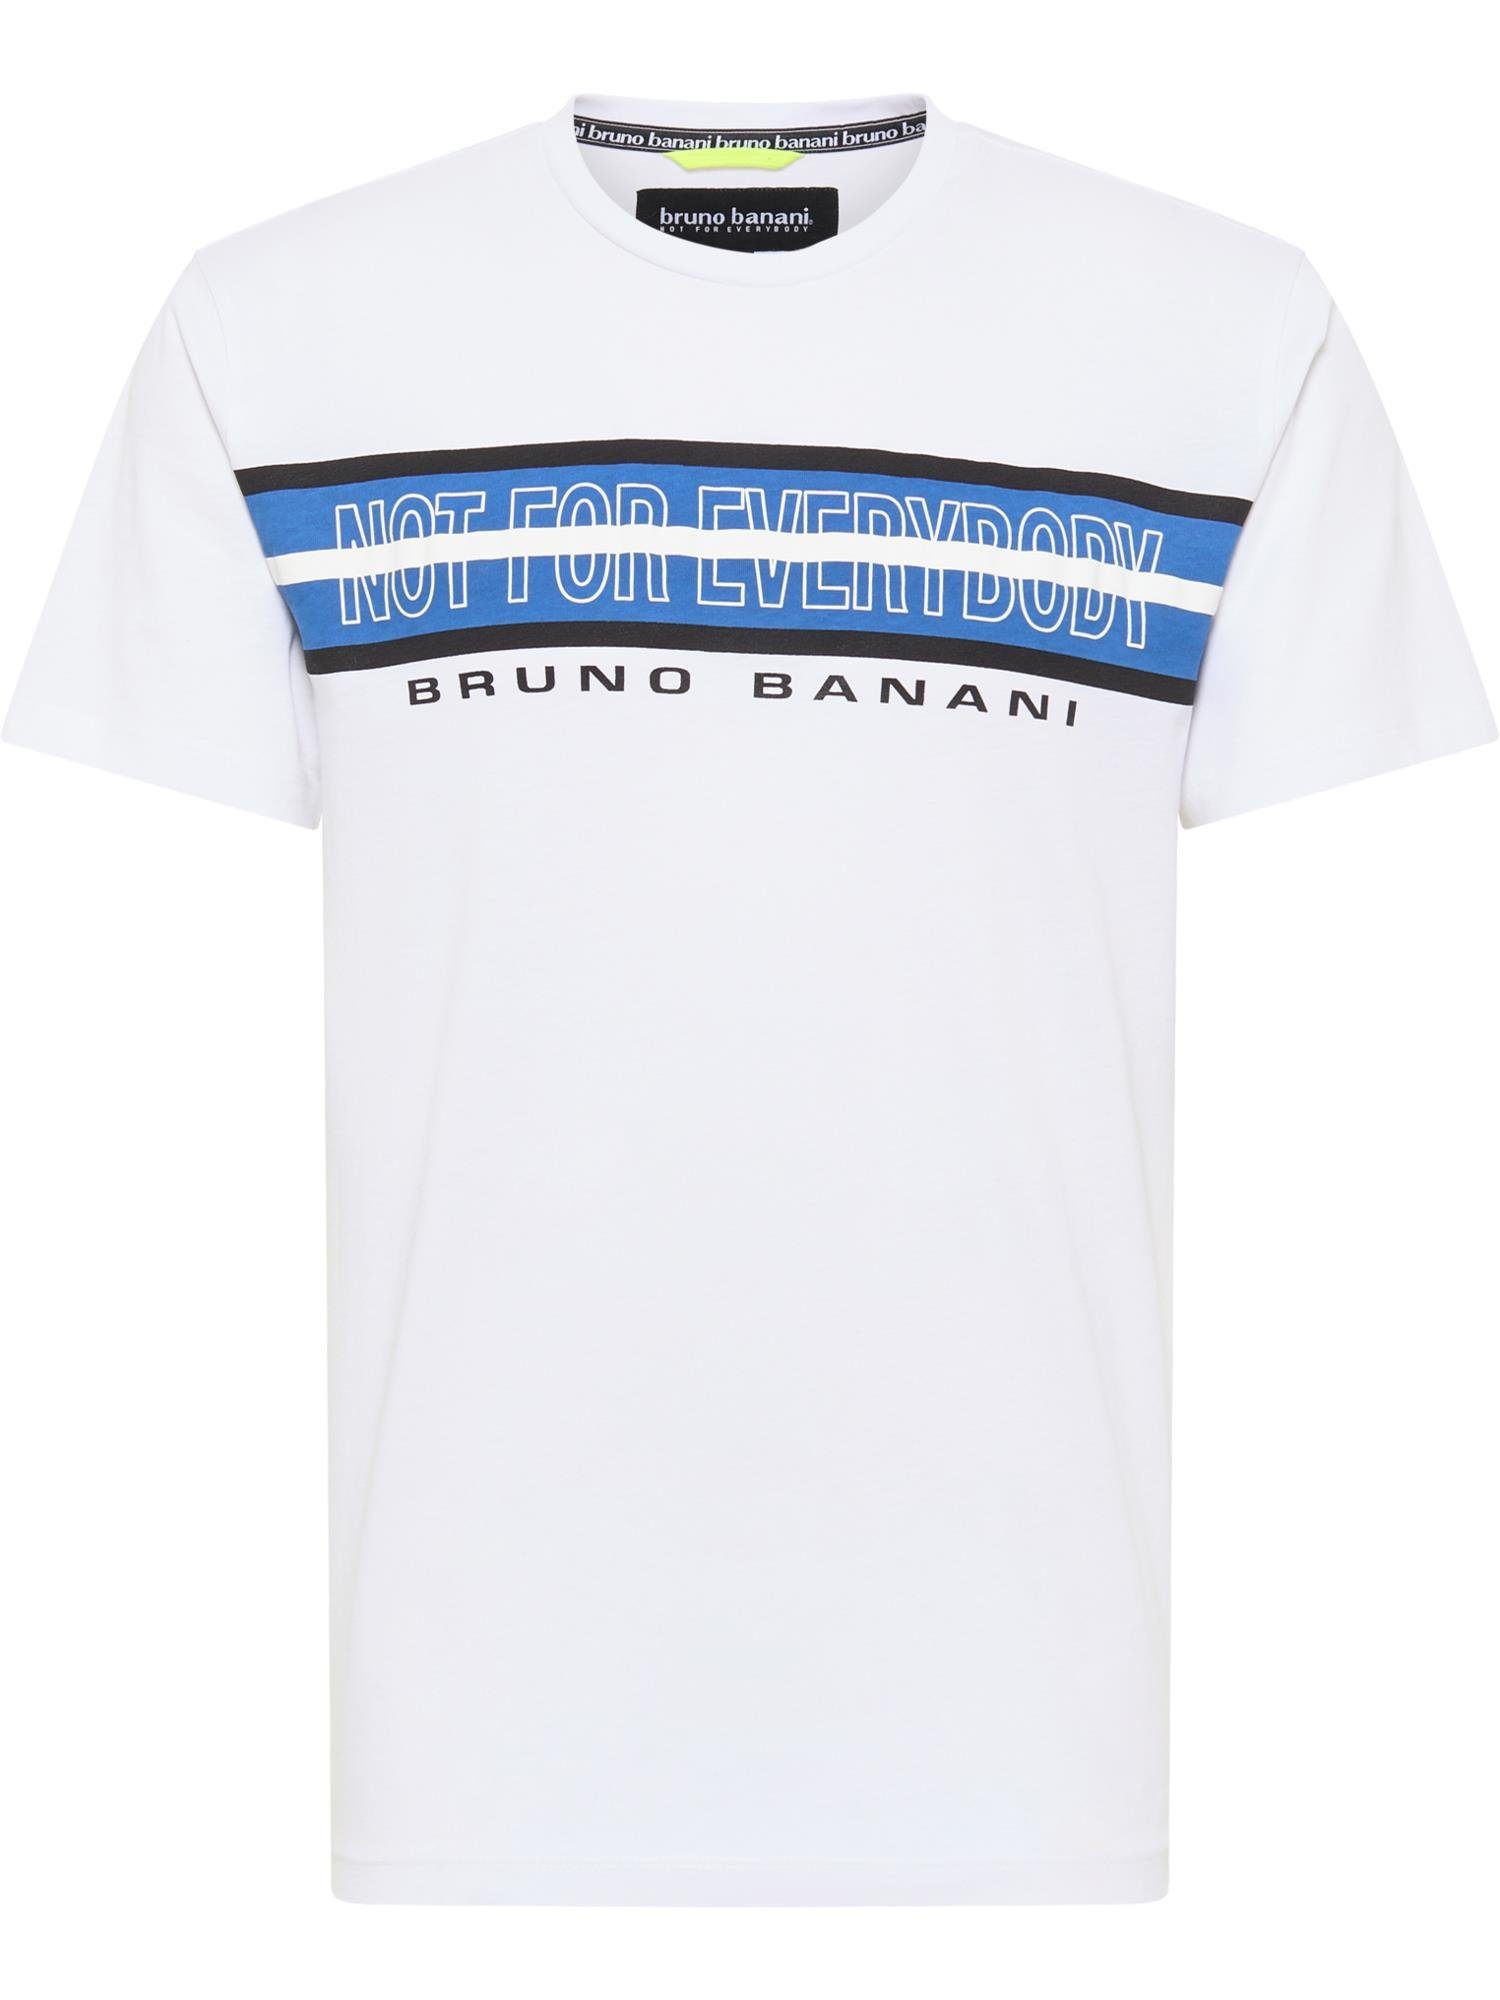 Banani T-Shirt Bruno Becker